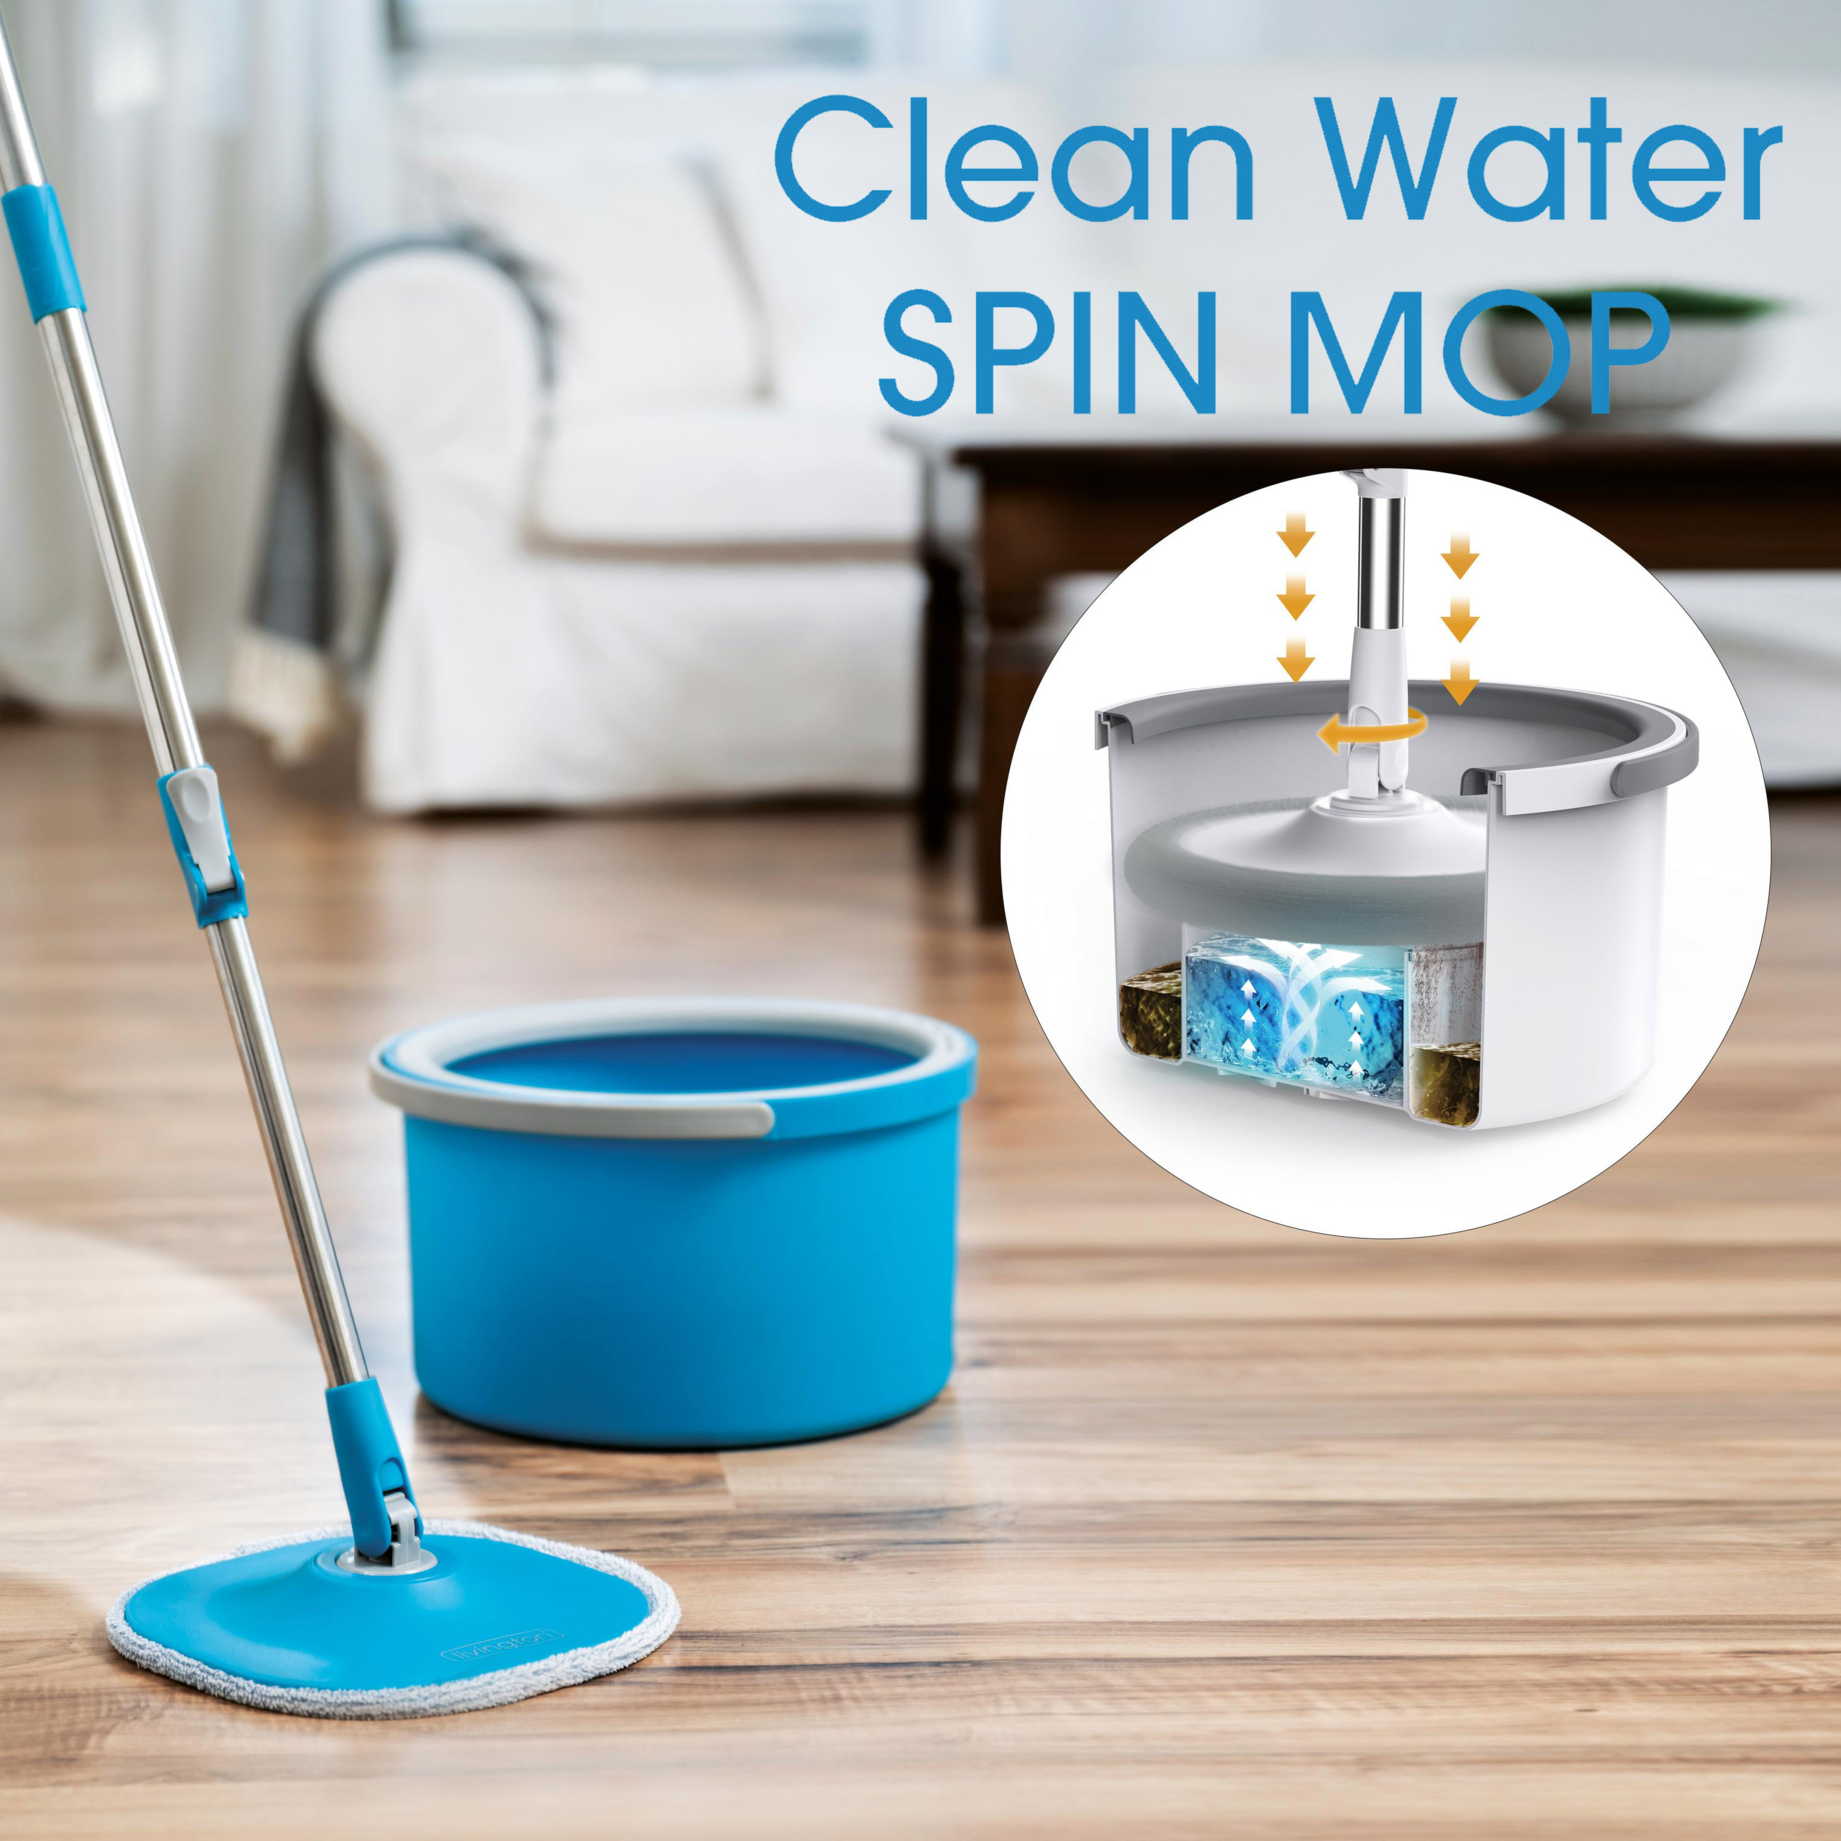 Clean Water Spin Mop mocio leggerissimo e super efficace ACQUA PULITA